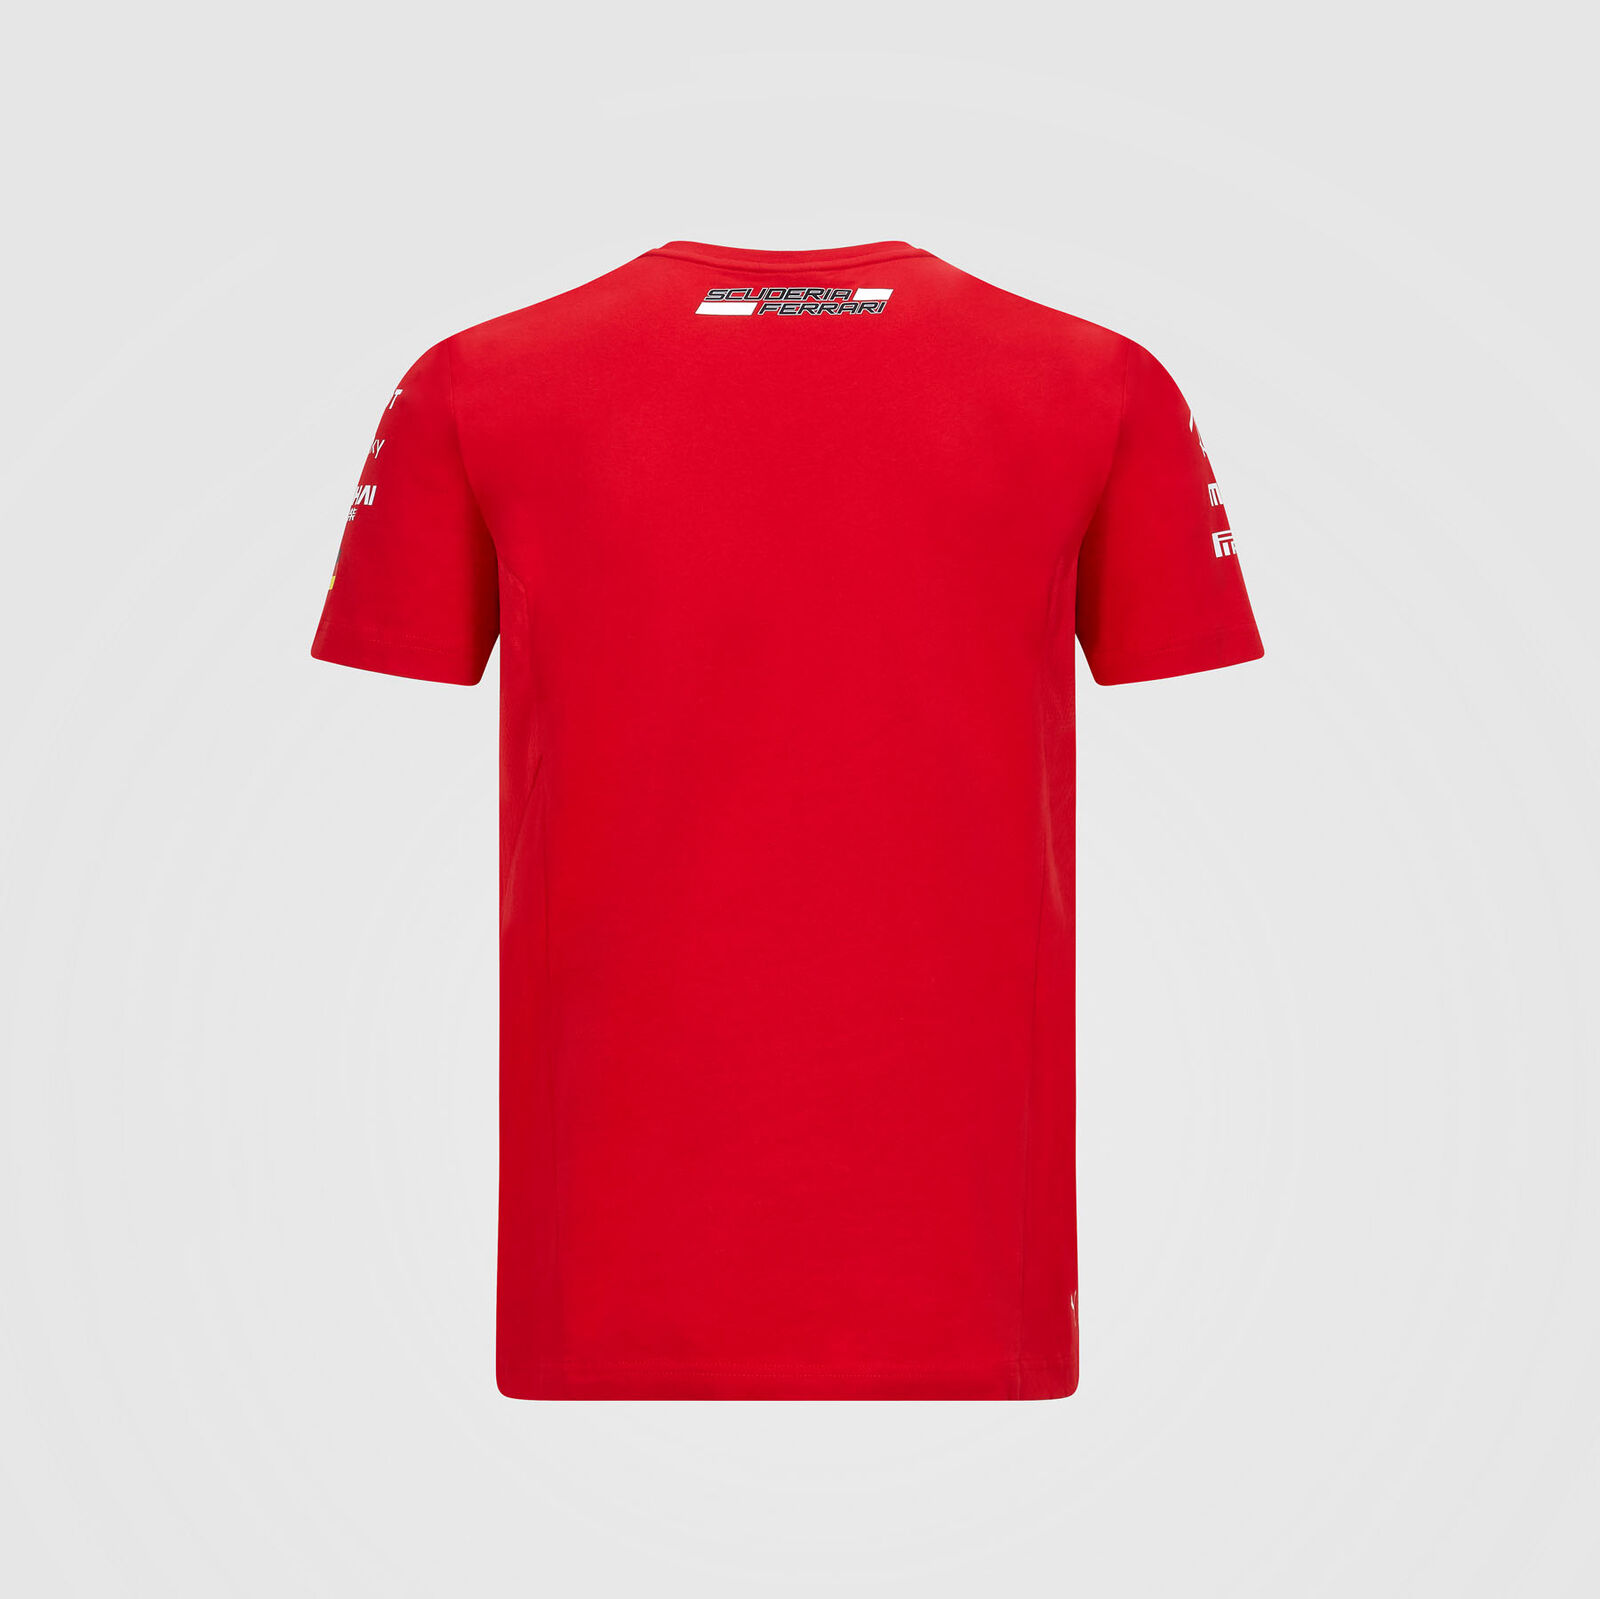 Out of breath basketball wash Sebastian Vettel 2020 Team T-Shirt - Scuderia Ferrari | Fuel For Fans